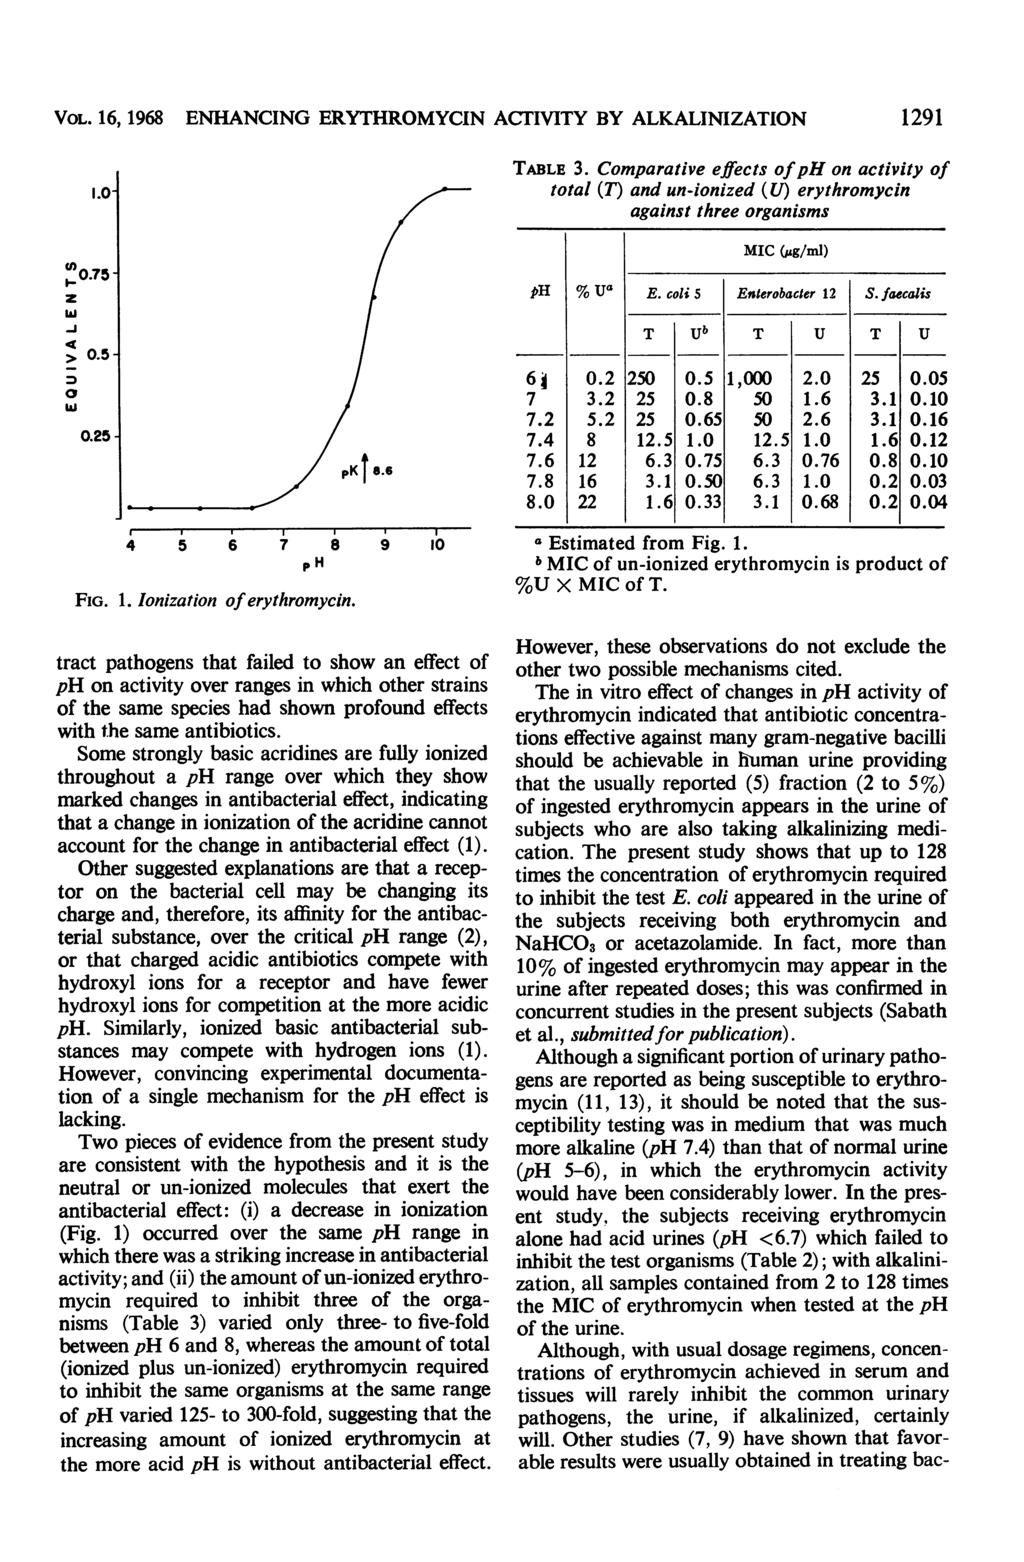 VOL. 6,968 ENHANCING ERYTHROMYCIN ACTIVITY BY ALKALINIZATION 9 z w ceptibility testing was in medium that was much more alkaline (ph.